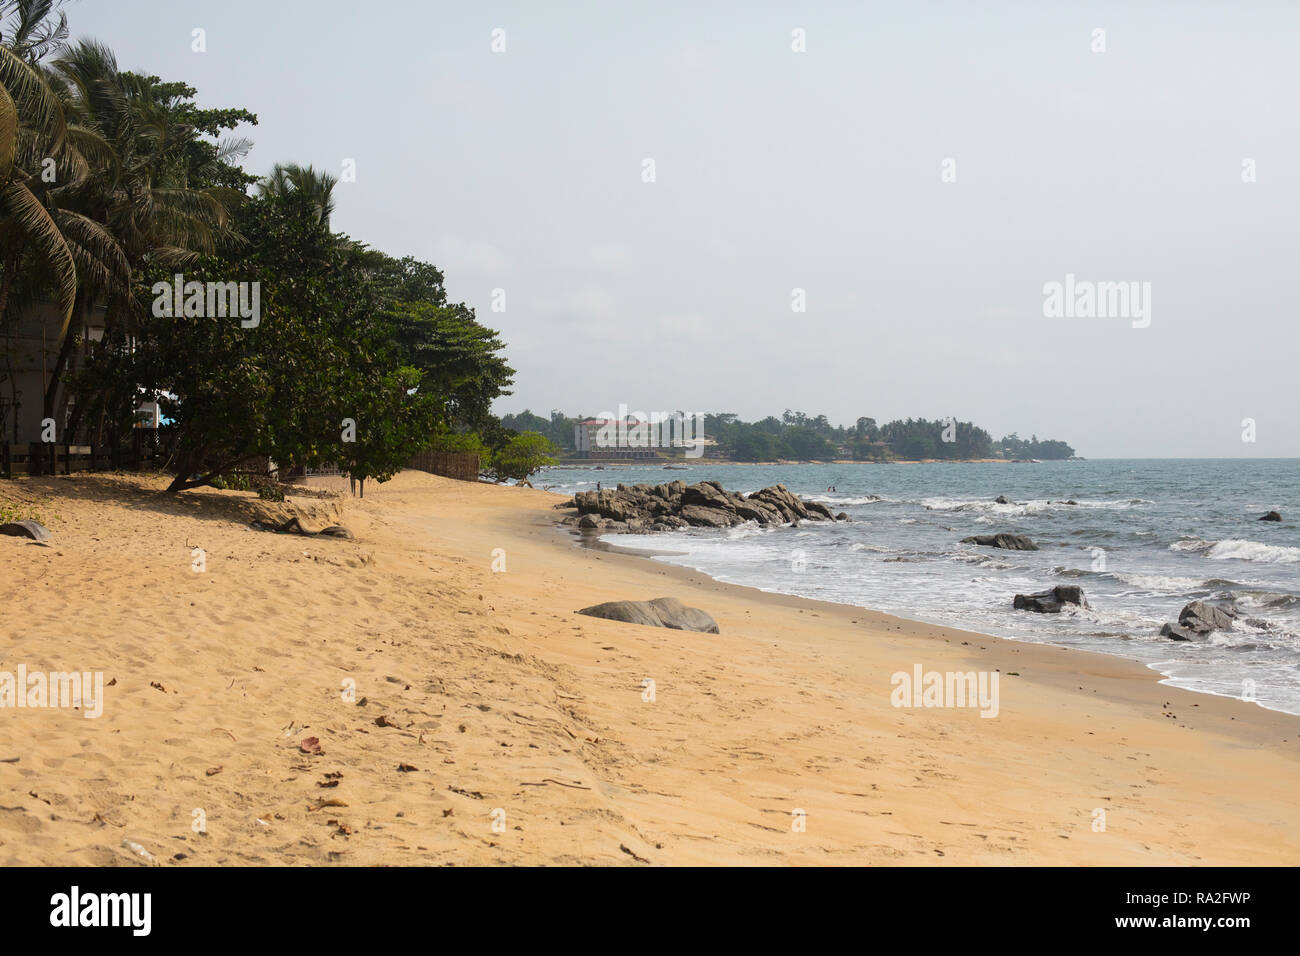 Kribi / Cameroon - February 13 2017: The beach of the coastal town of Kribi, Cameroon. Stock Photo